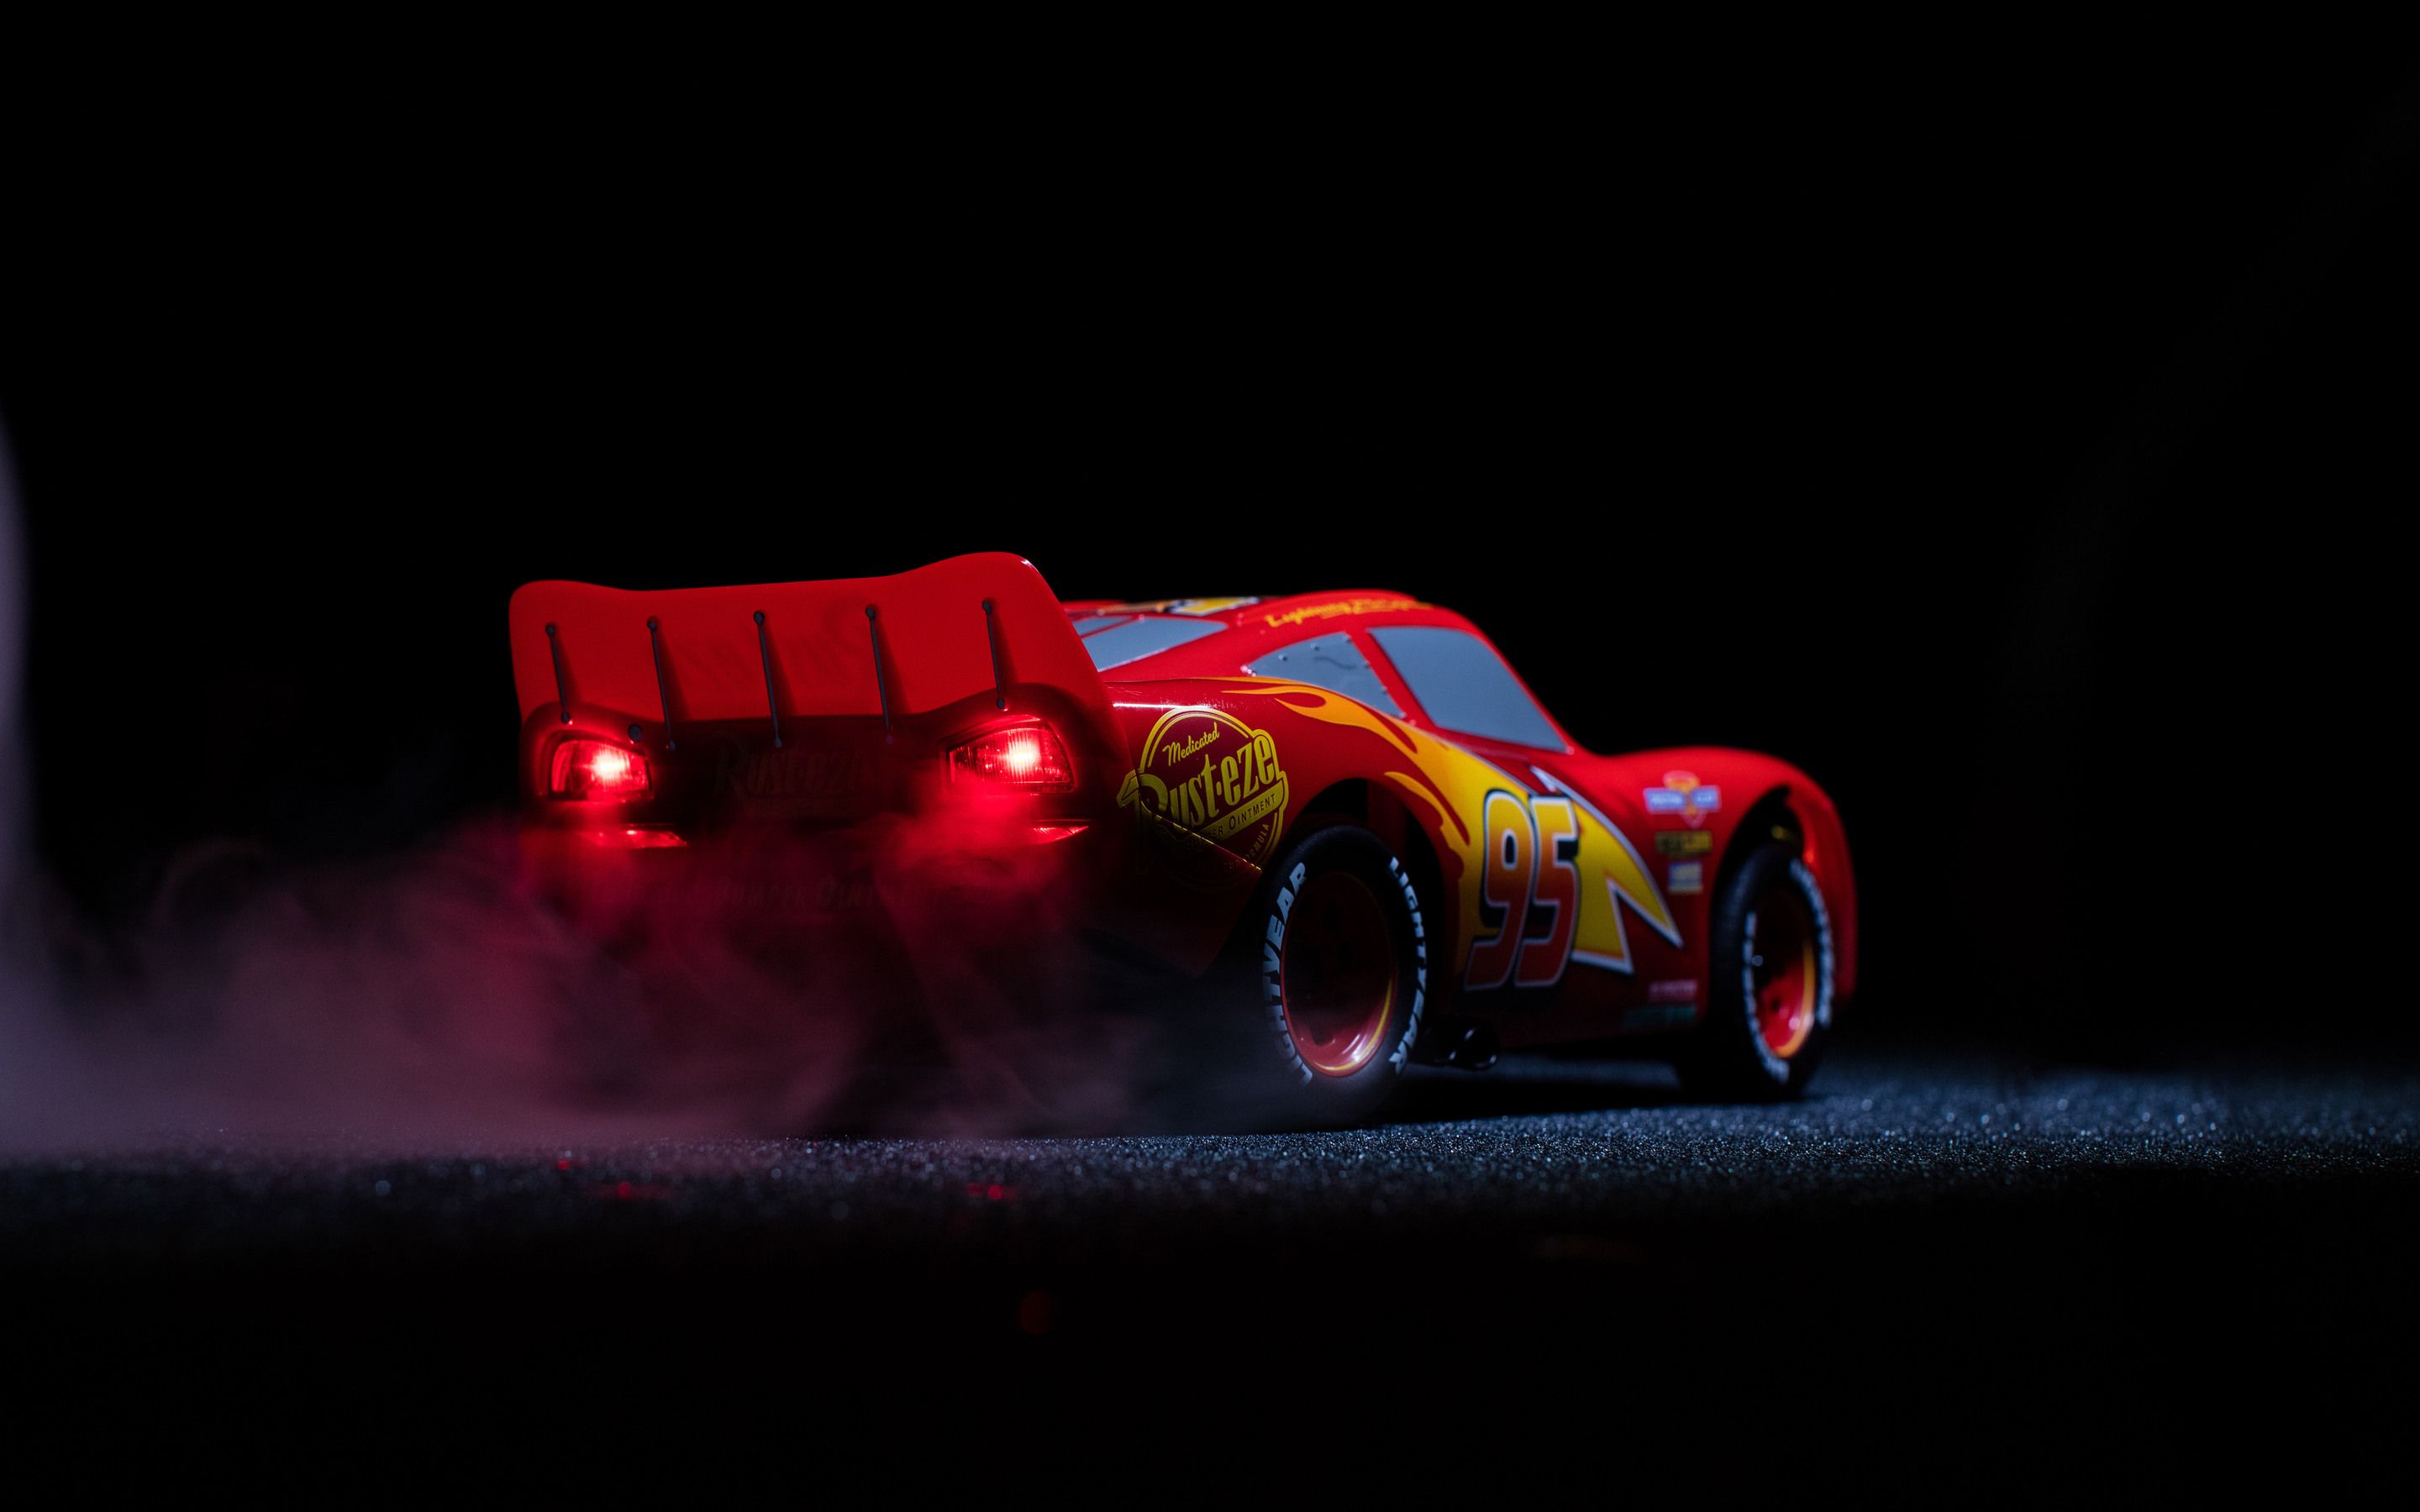 Lightning McQueen Cars 3 Pixar Disney 4k Macbook Pro Retina HD 4k Wallpaper, Image, Background, Photo and Picture